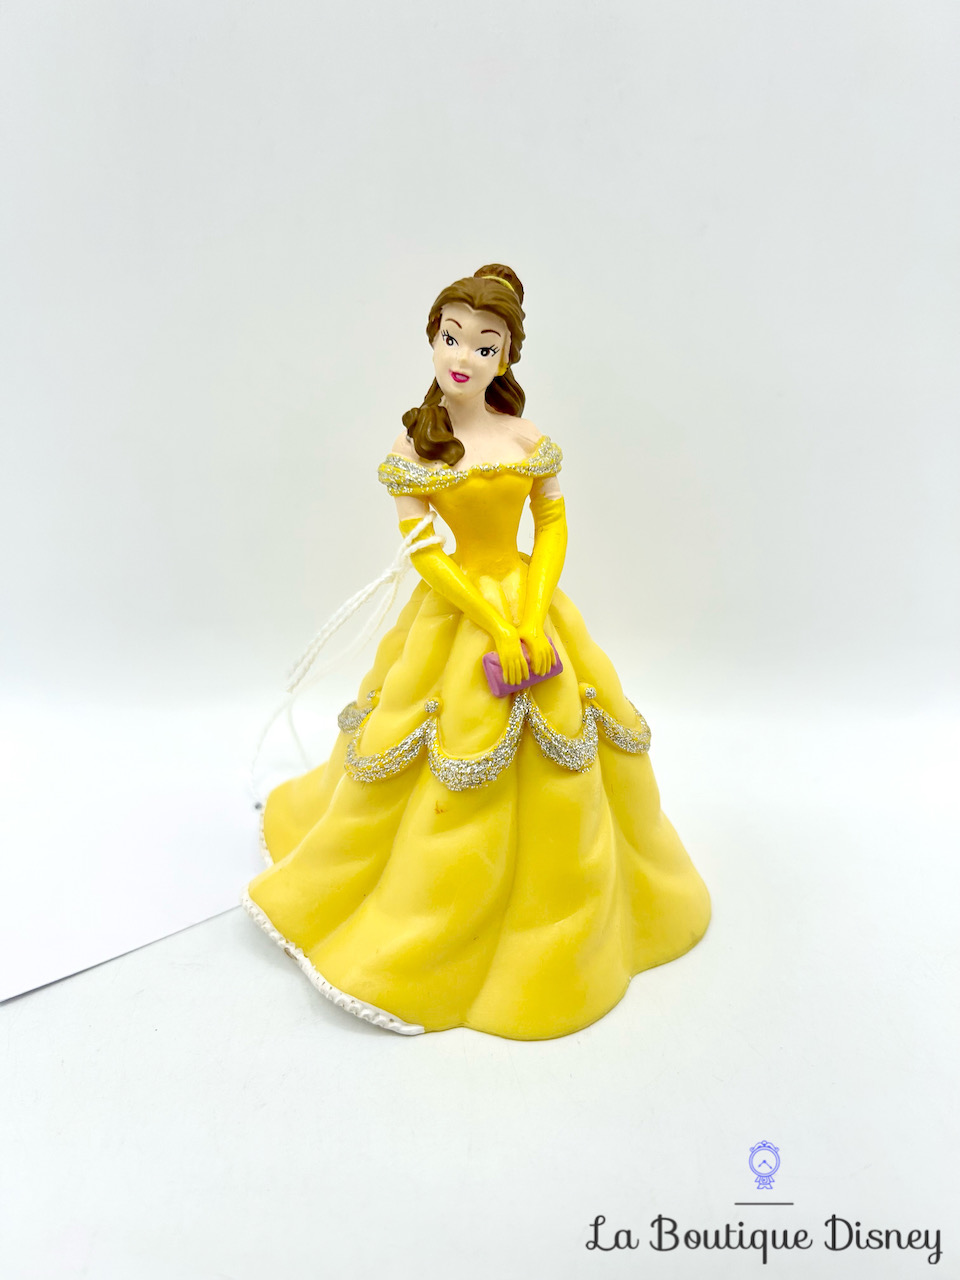 figurine-belle-la-belle-et-la-bete-disney-bullyland-livre-princesse-jaune-1